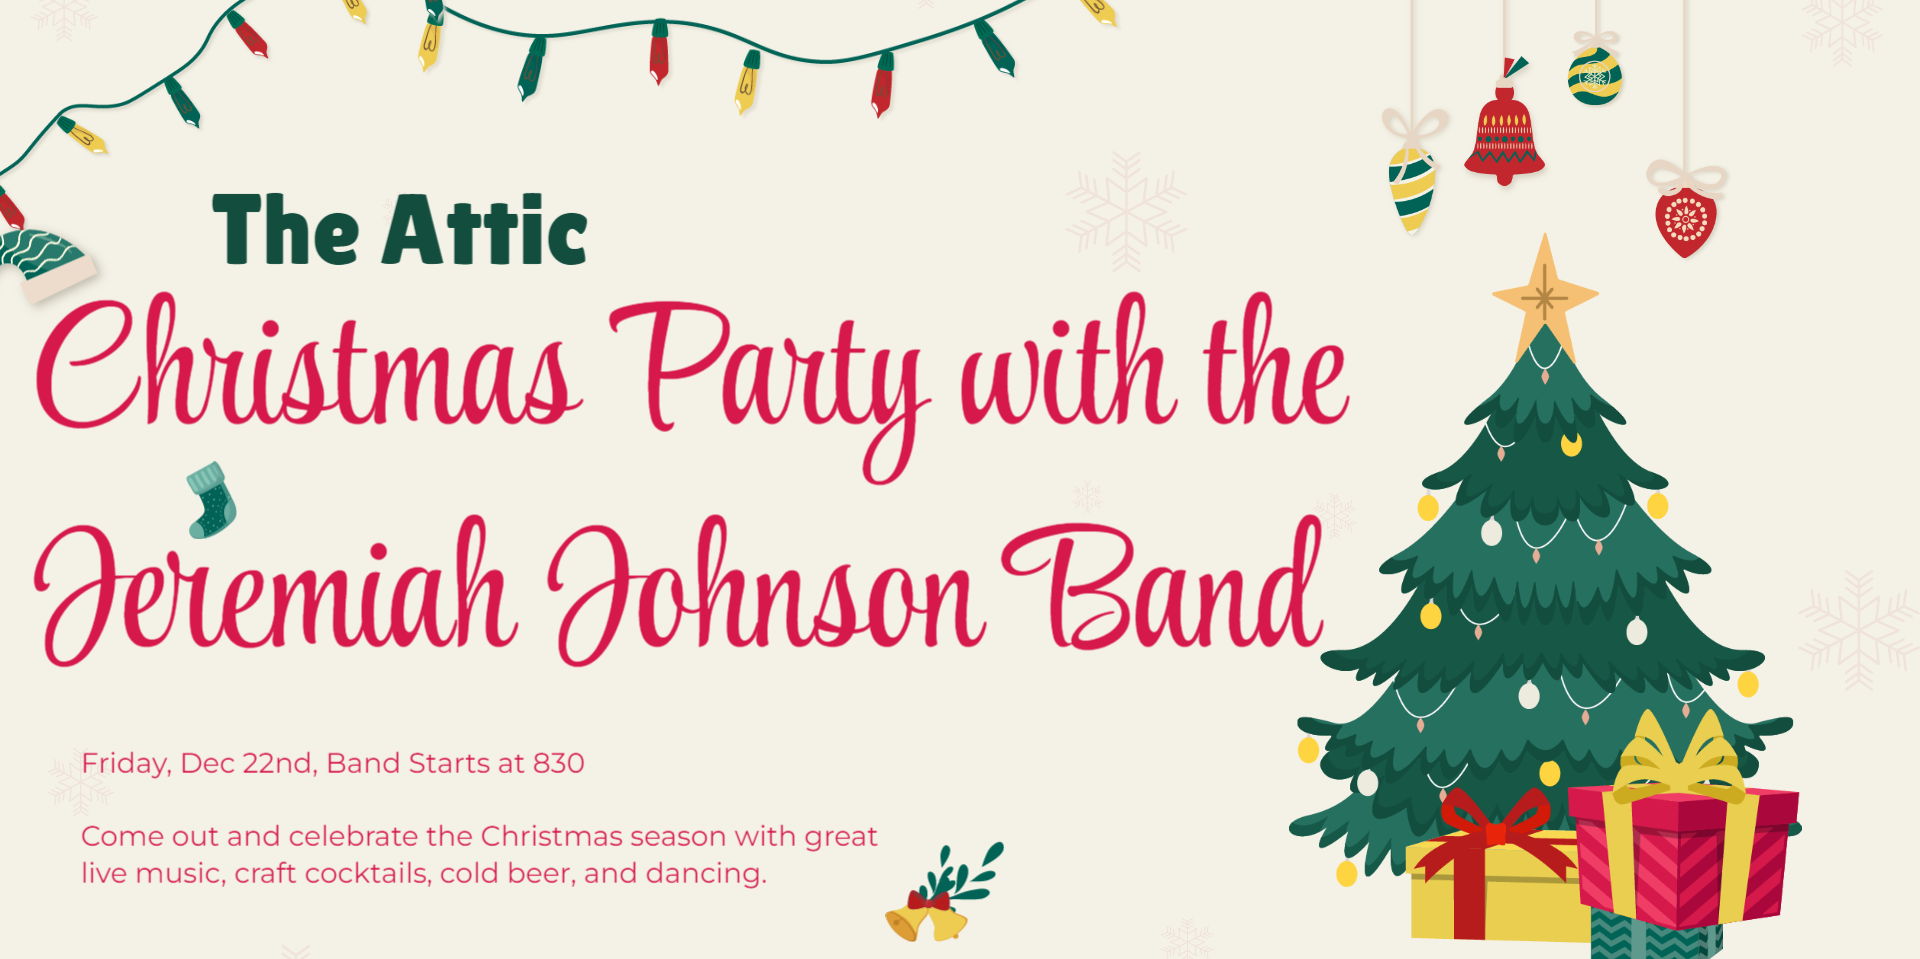 Jeremiah Johnson Band - The Attic Christmas Party promotional image